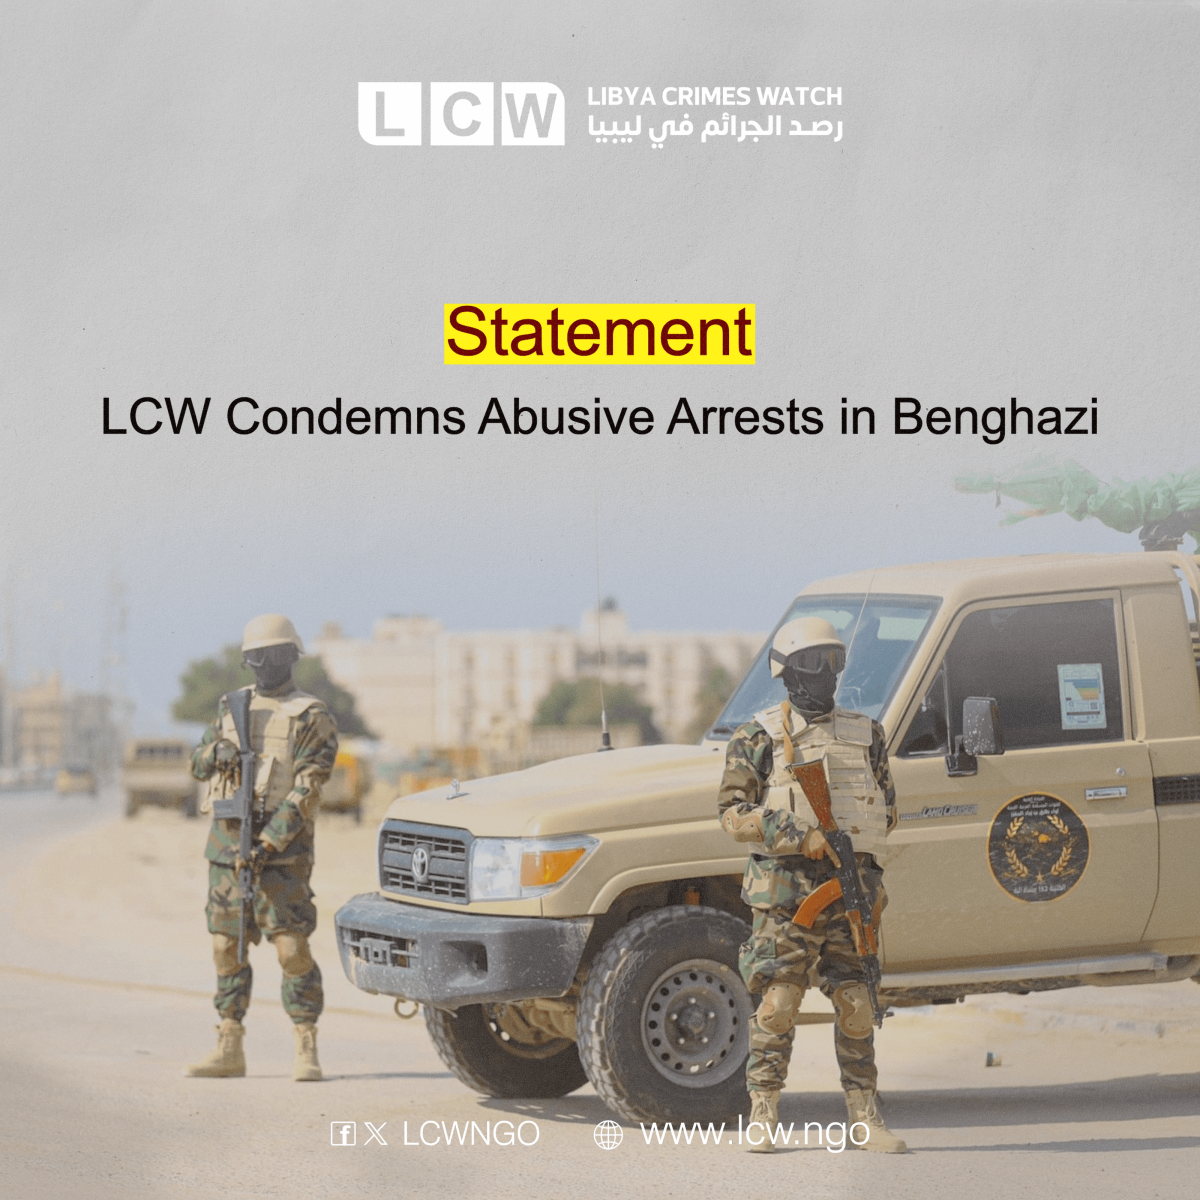 Statement: LCW Condemns Abusive Arrests in Benghazi